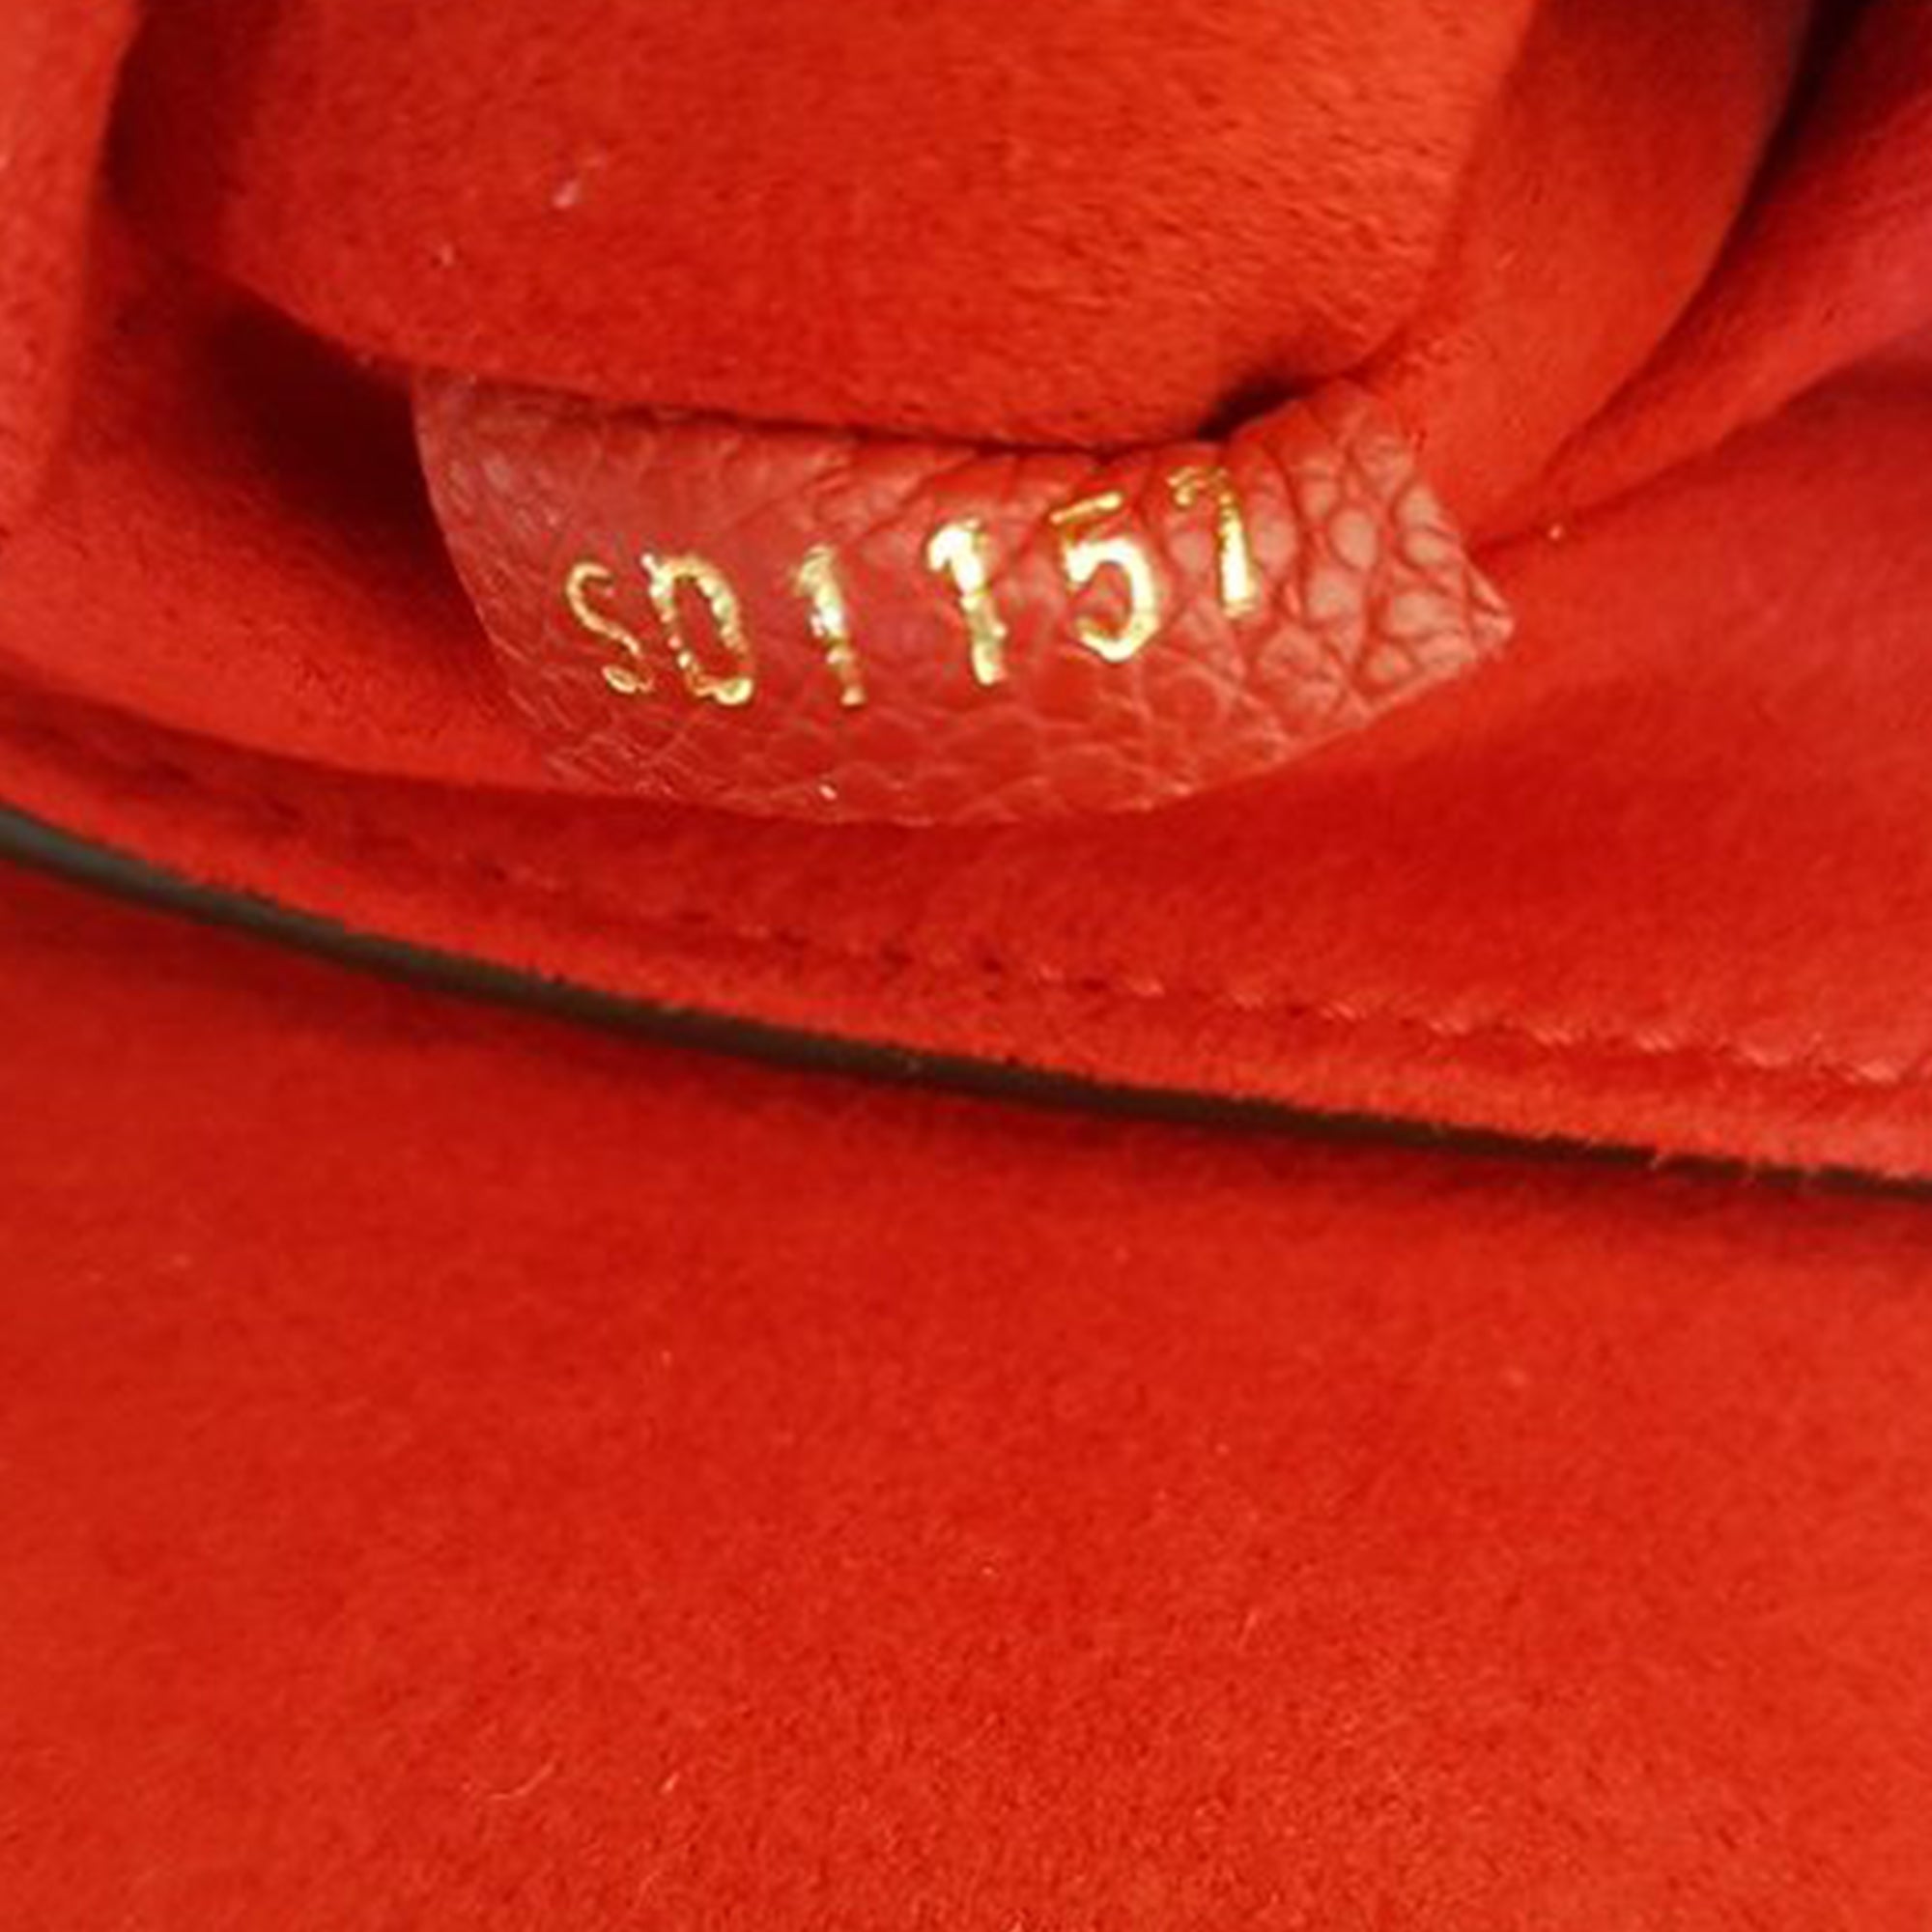 Saint Sulpice PM Monogram Empreinte Leather Shoulder Bag – Poshbag